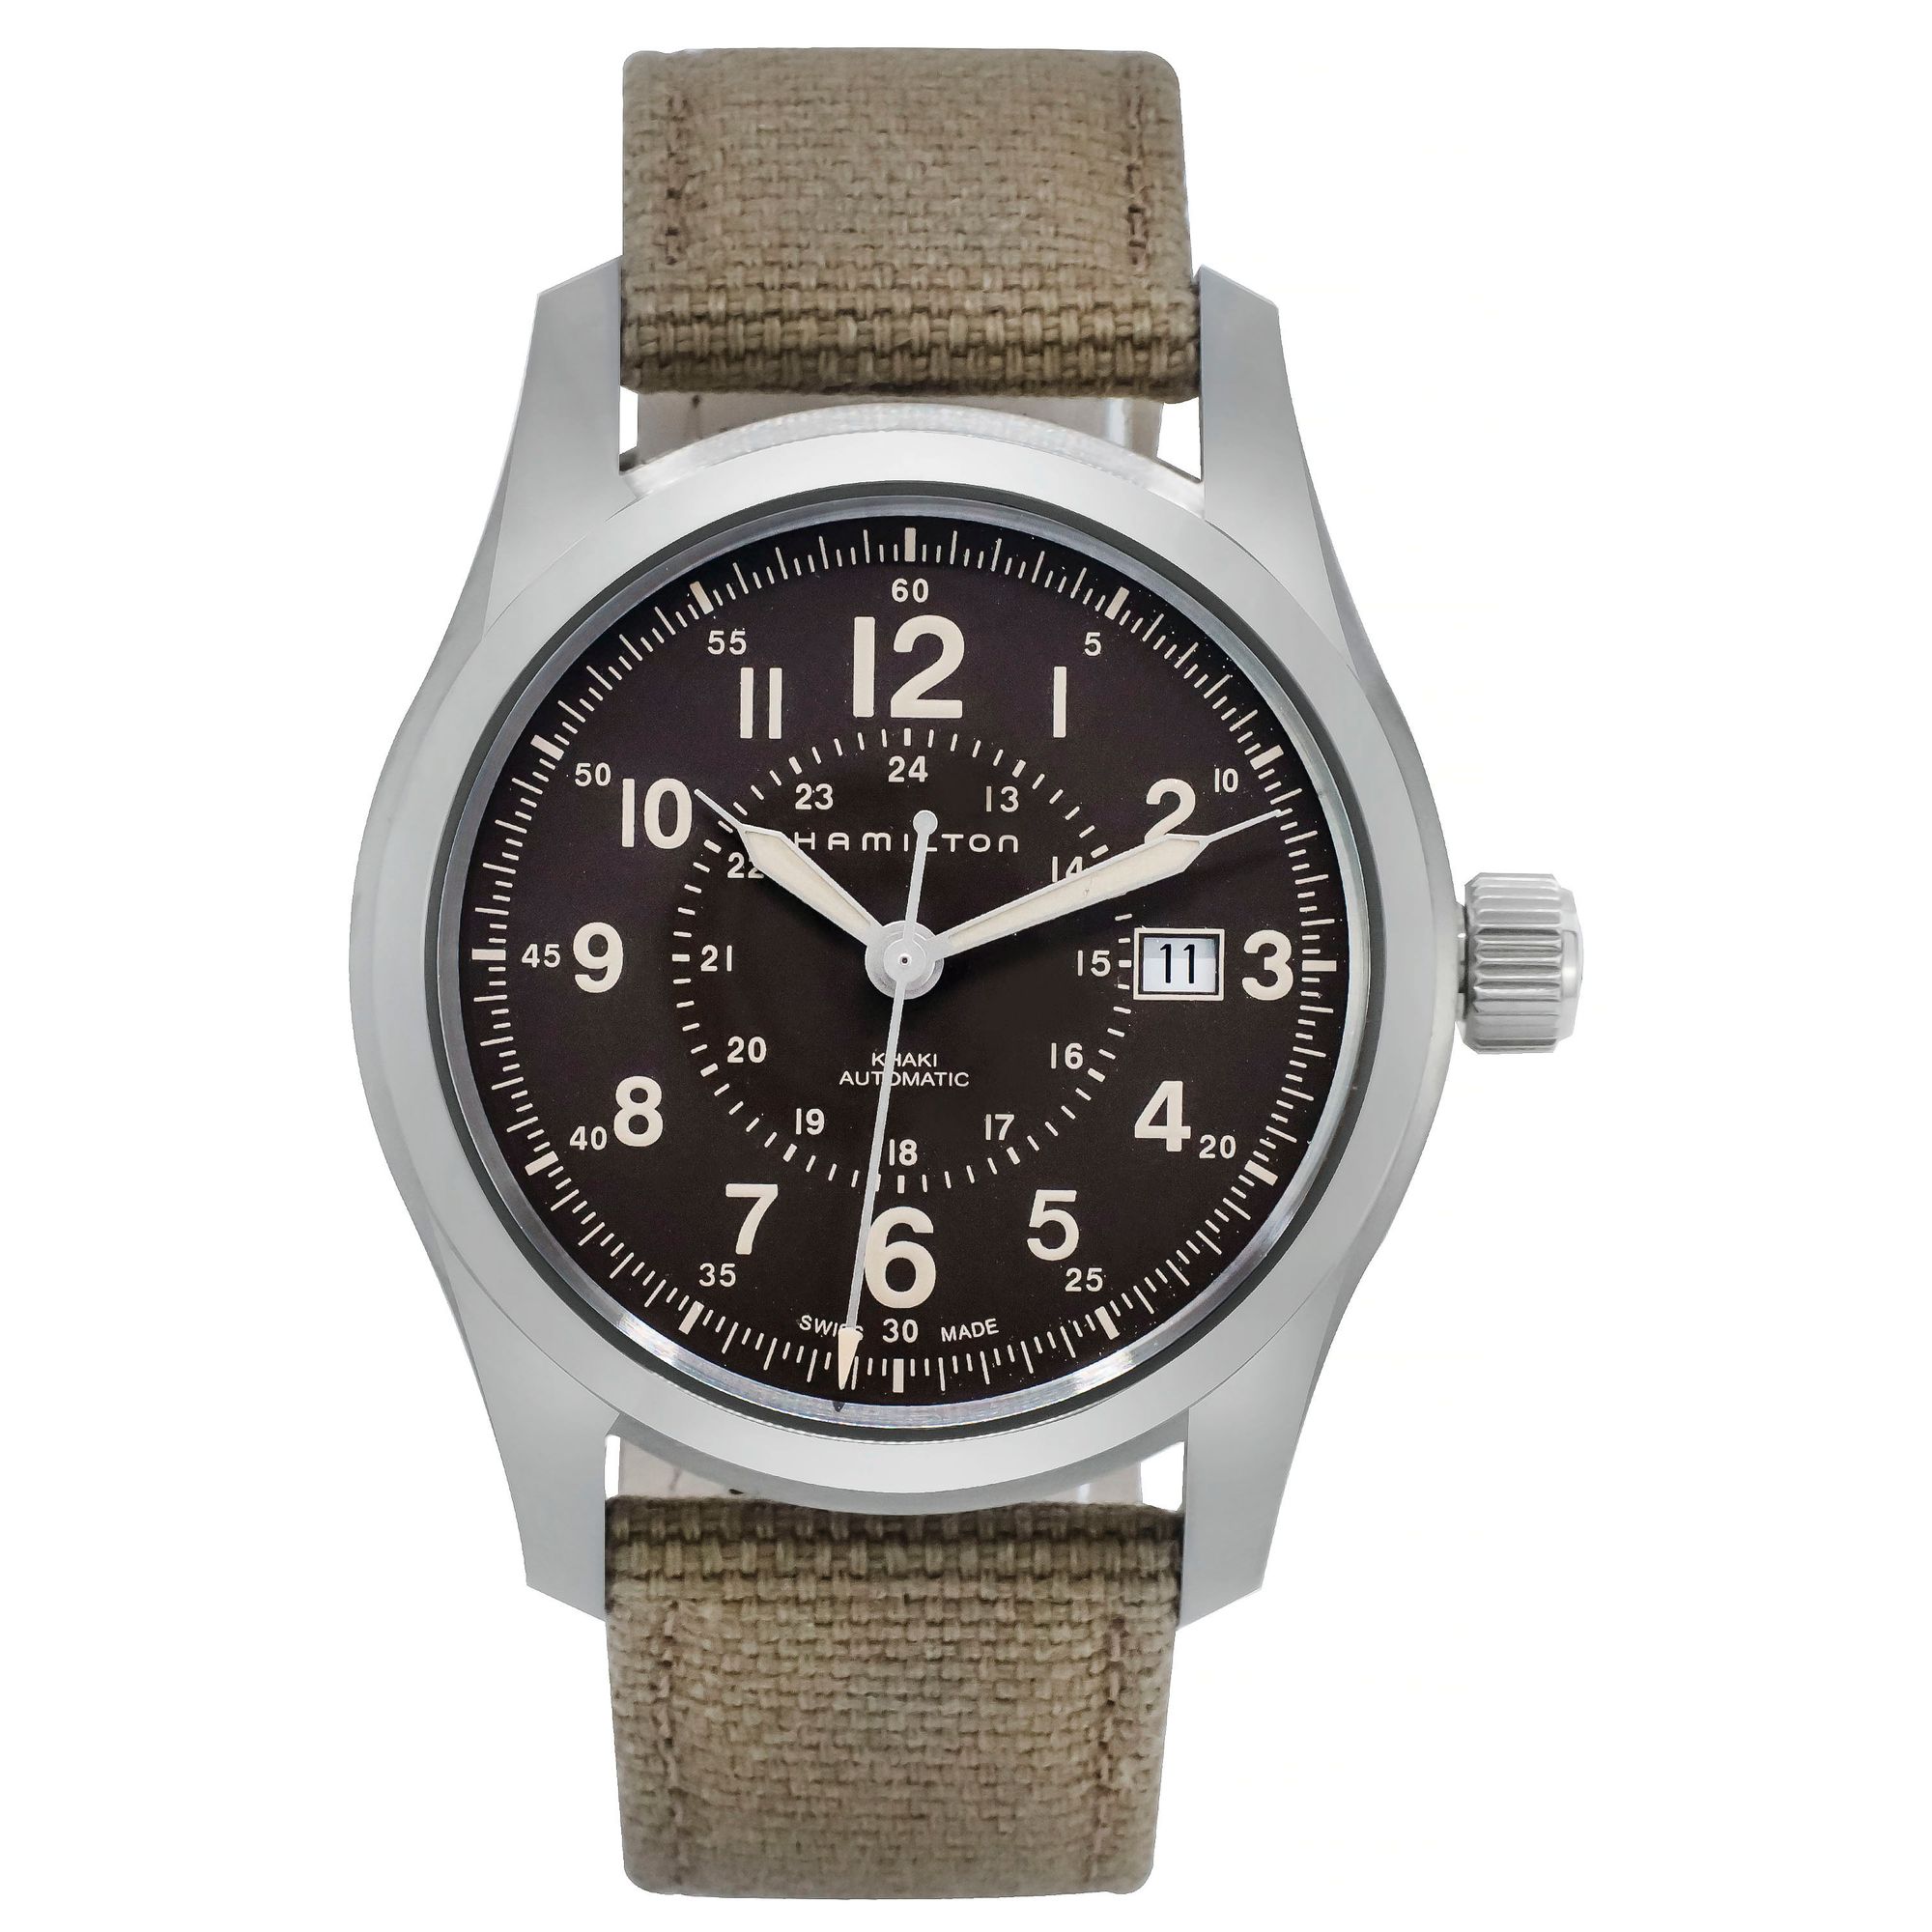 Hamilton Khaki Field Automatic Watch w/ Canvas Strap $299 + free s/h at ShopWorn